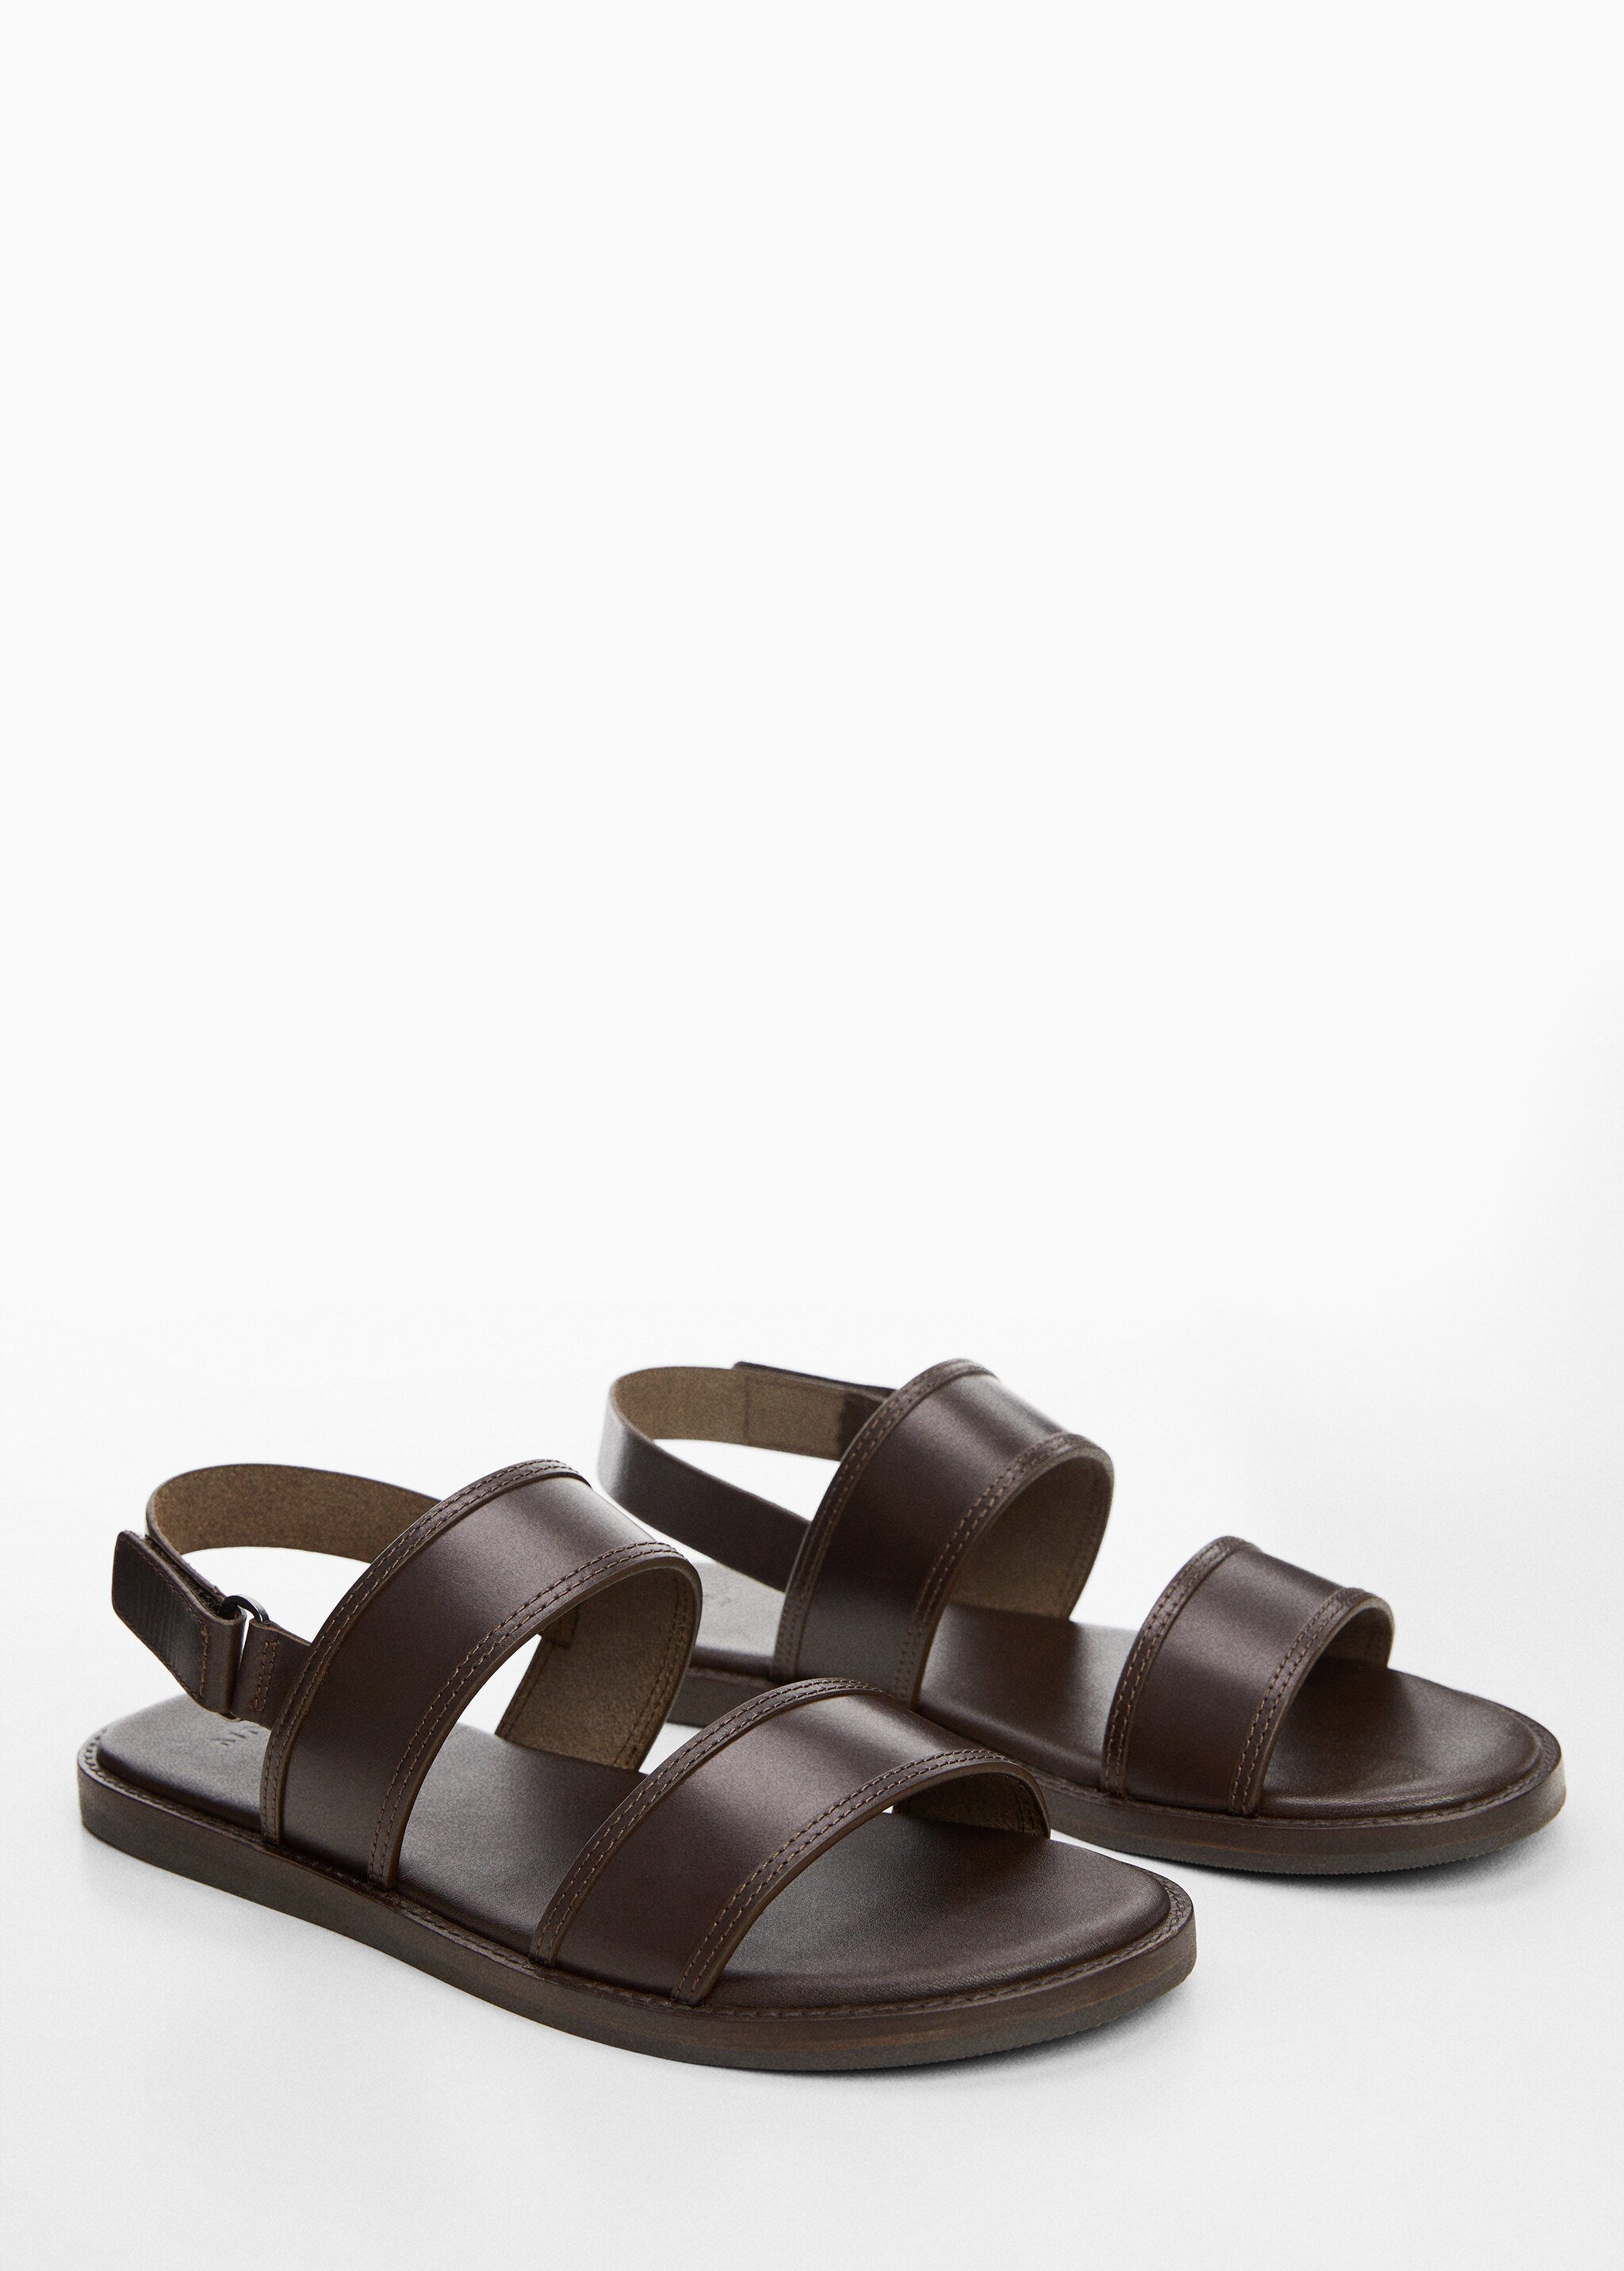 100% leather strap sandal - Medium plane